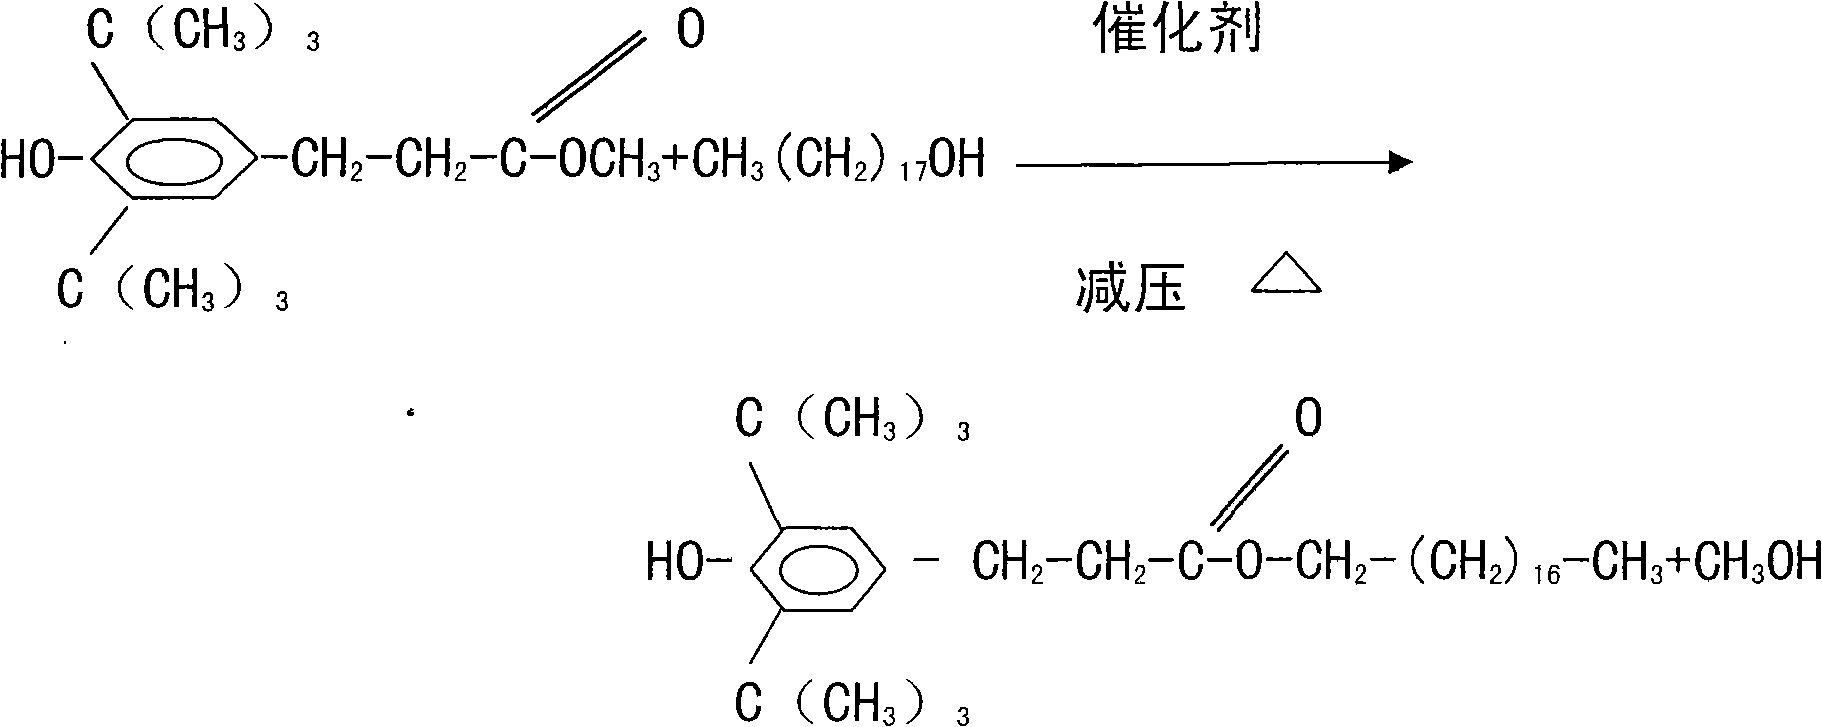 Atmospheric pressure production process for beta-(3.5-diteritiary butyl-4-hydroxy phenyl)propionic acid octadecanol ester